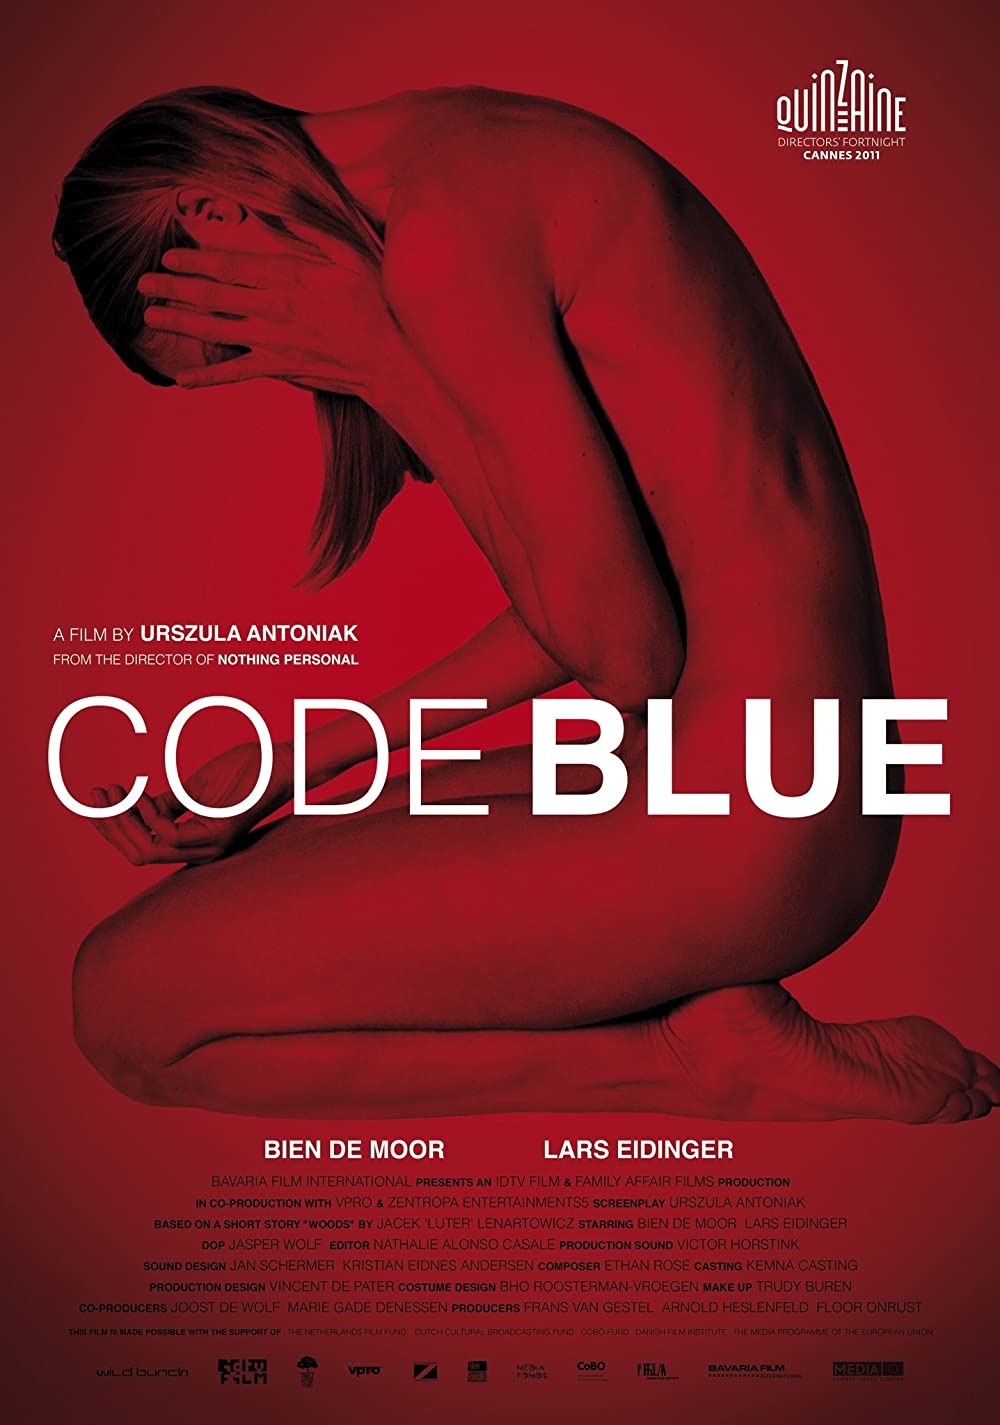 Filmbeschreibung zu Code Blue